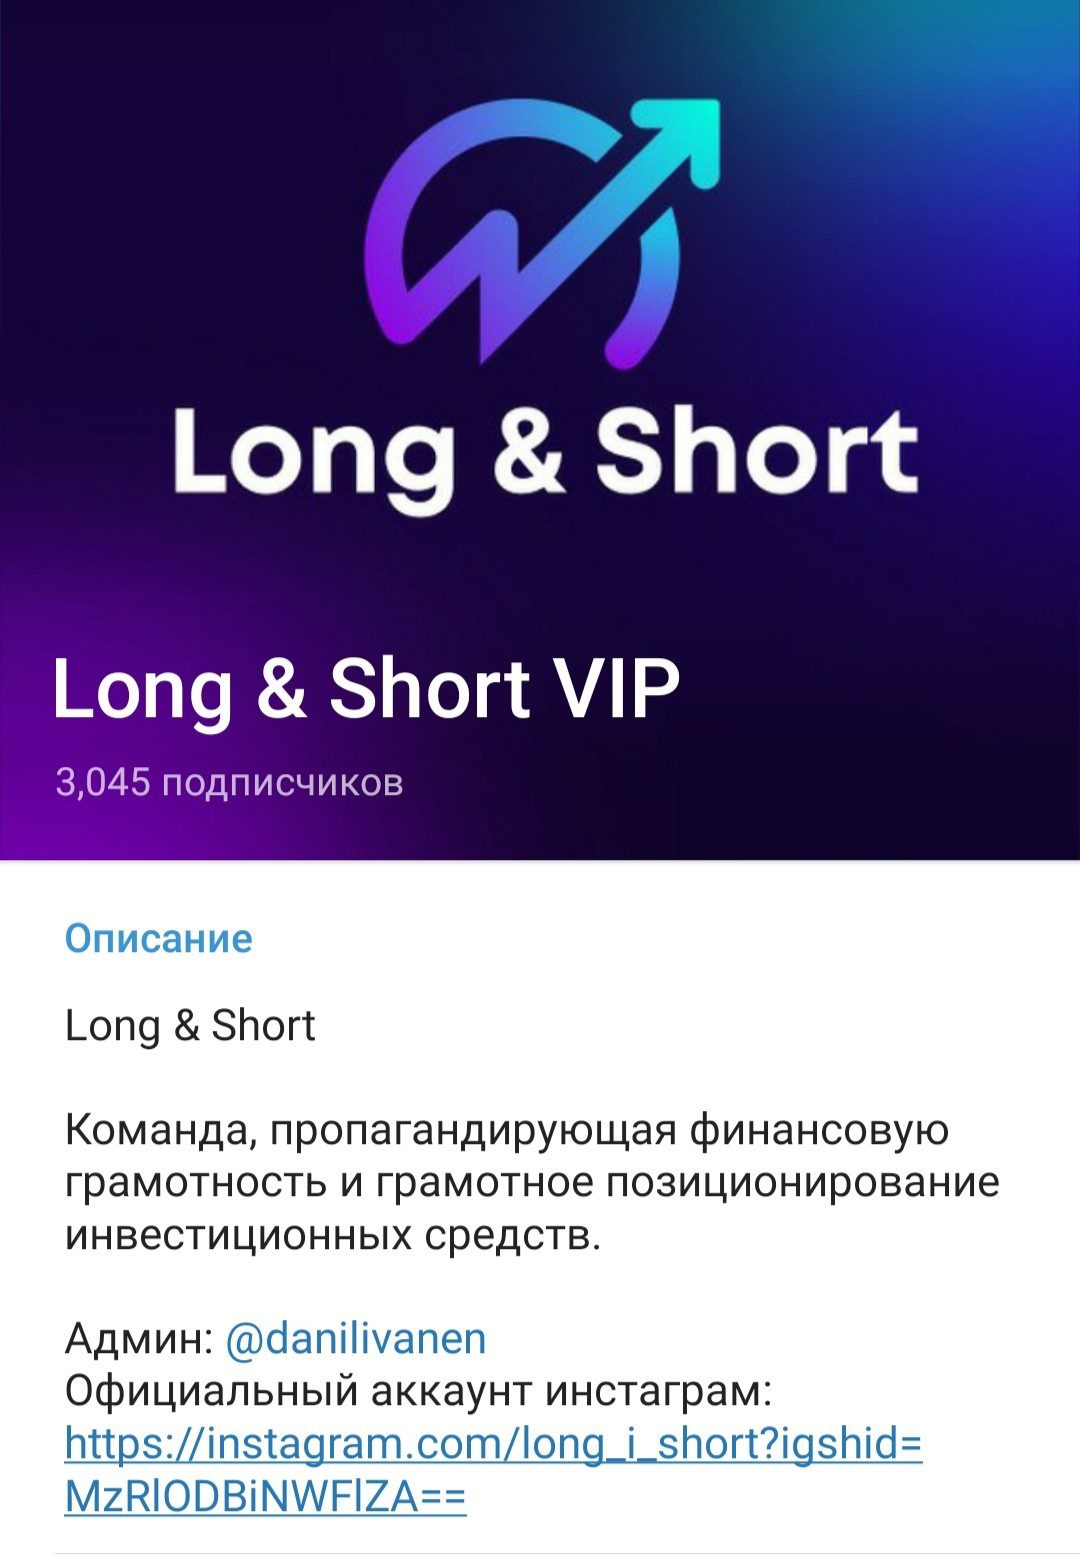 Long & Short VIP телеграмм канал